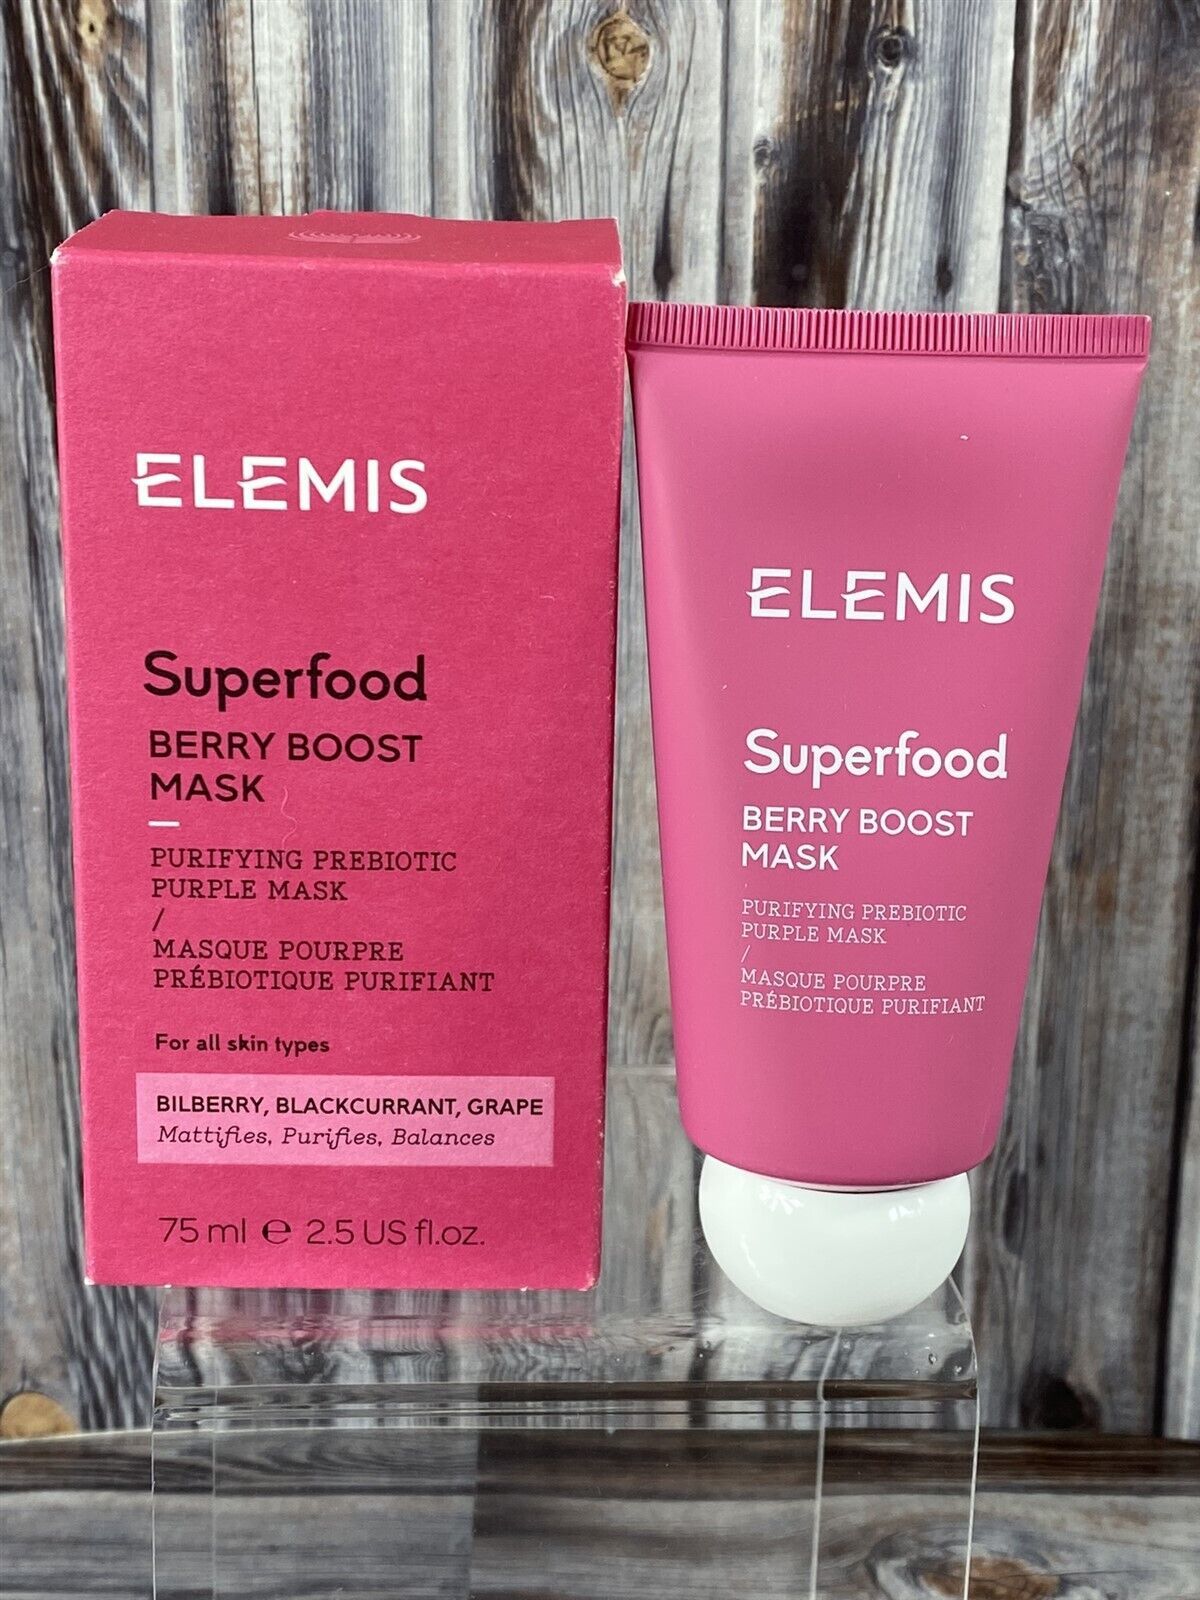 ELEMIS Superfood Berry Boost Mask Prebiotic Purple Face Mask - 2.5 fl oz - New! - $16.44